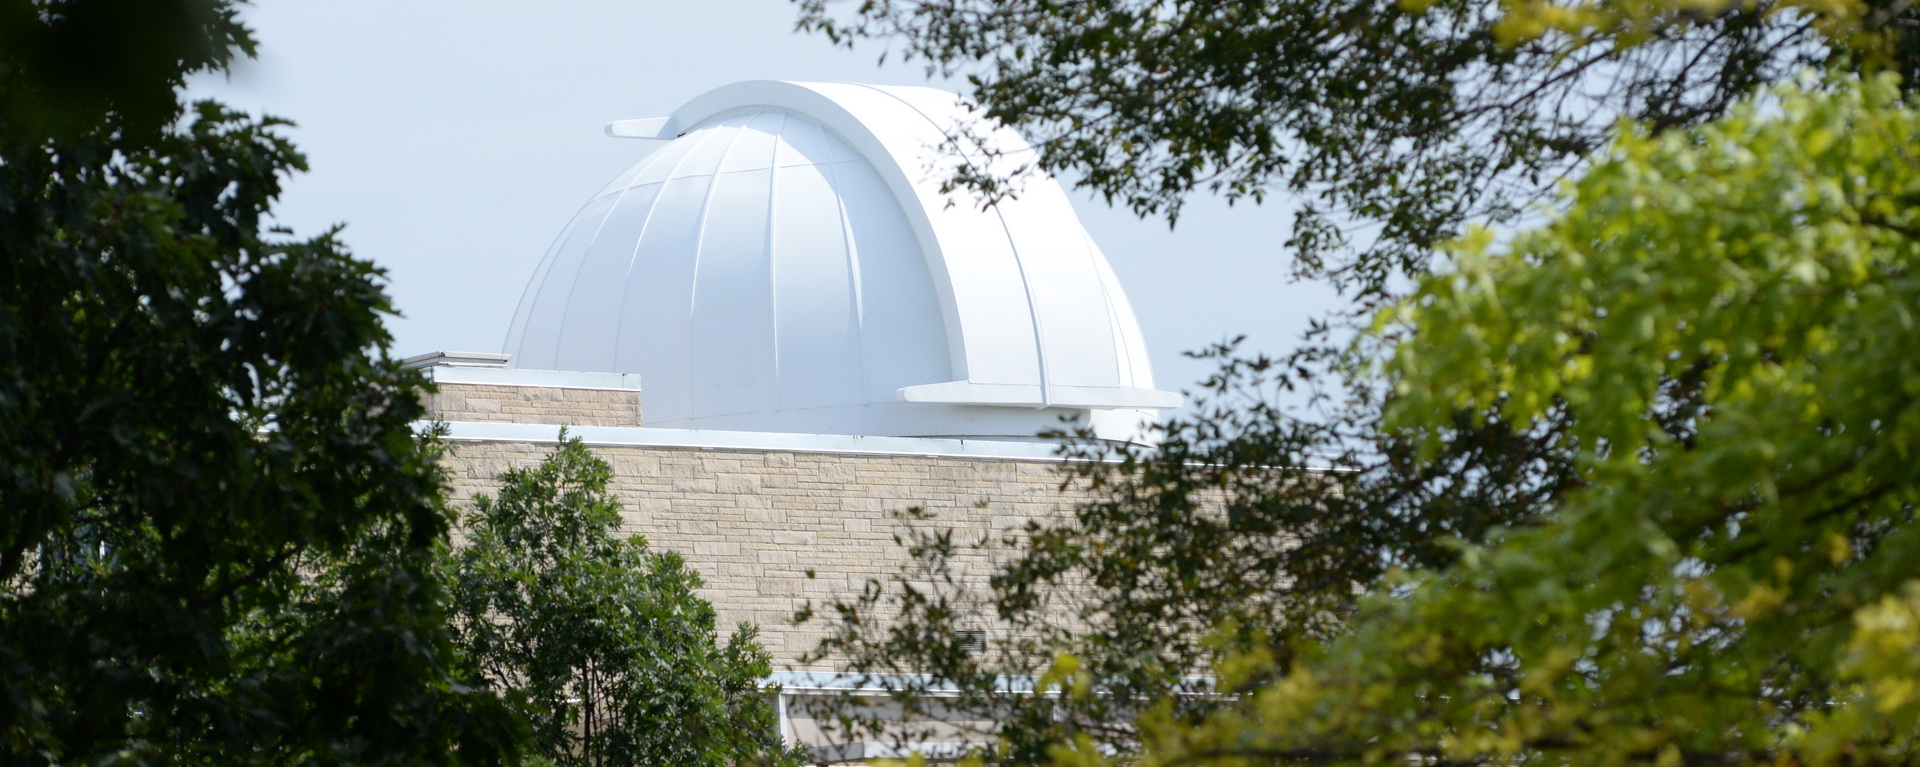 Crane Observatory Dome